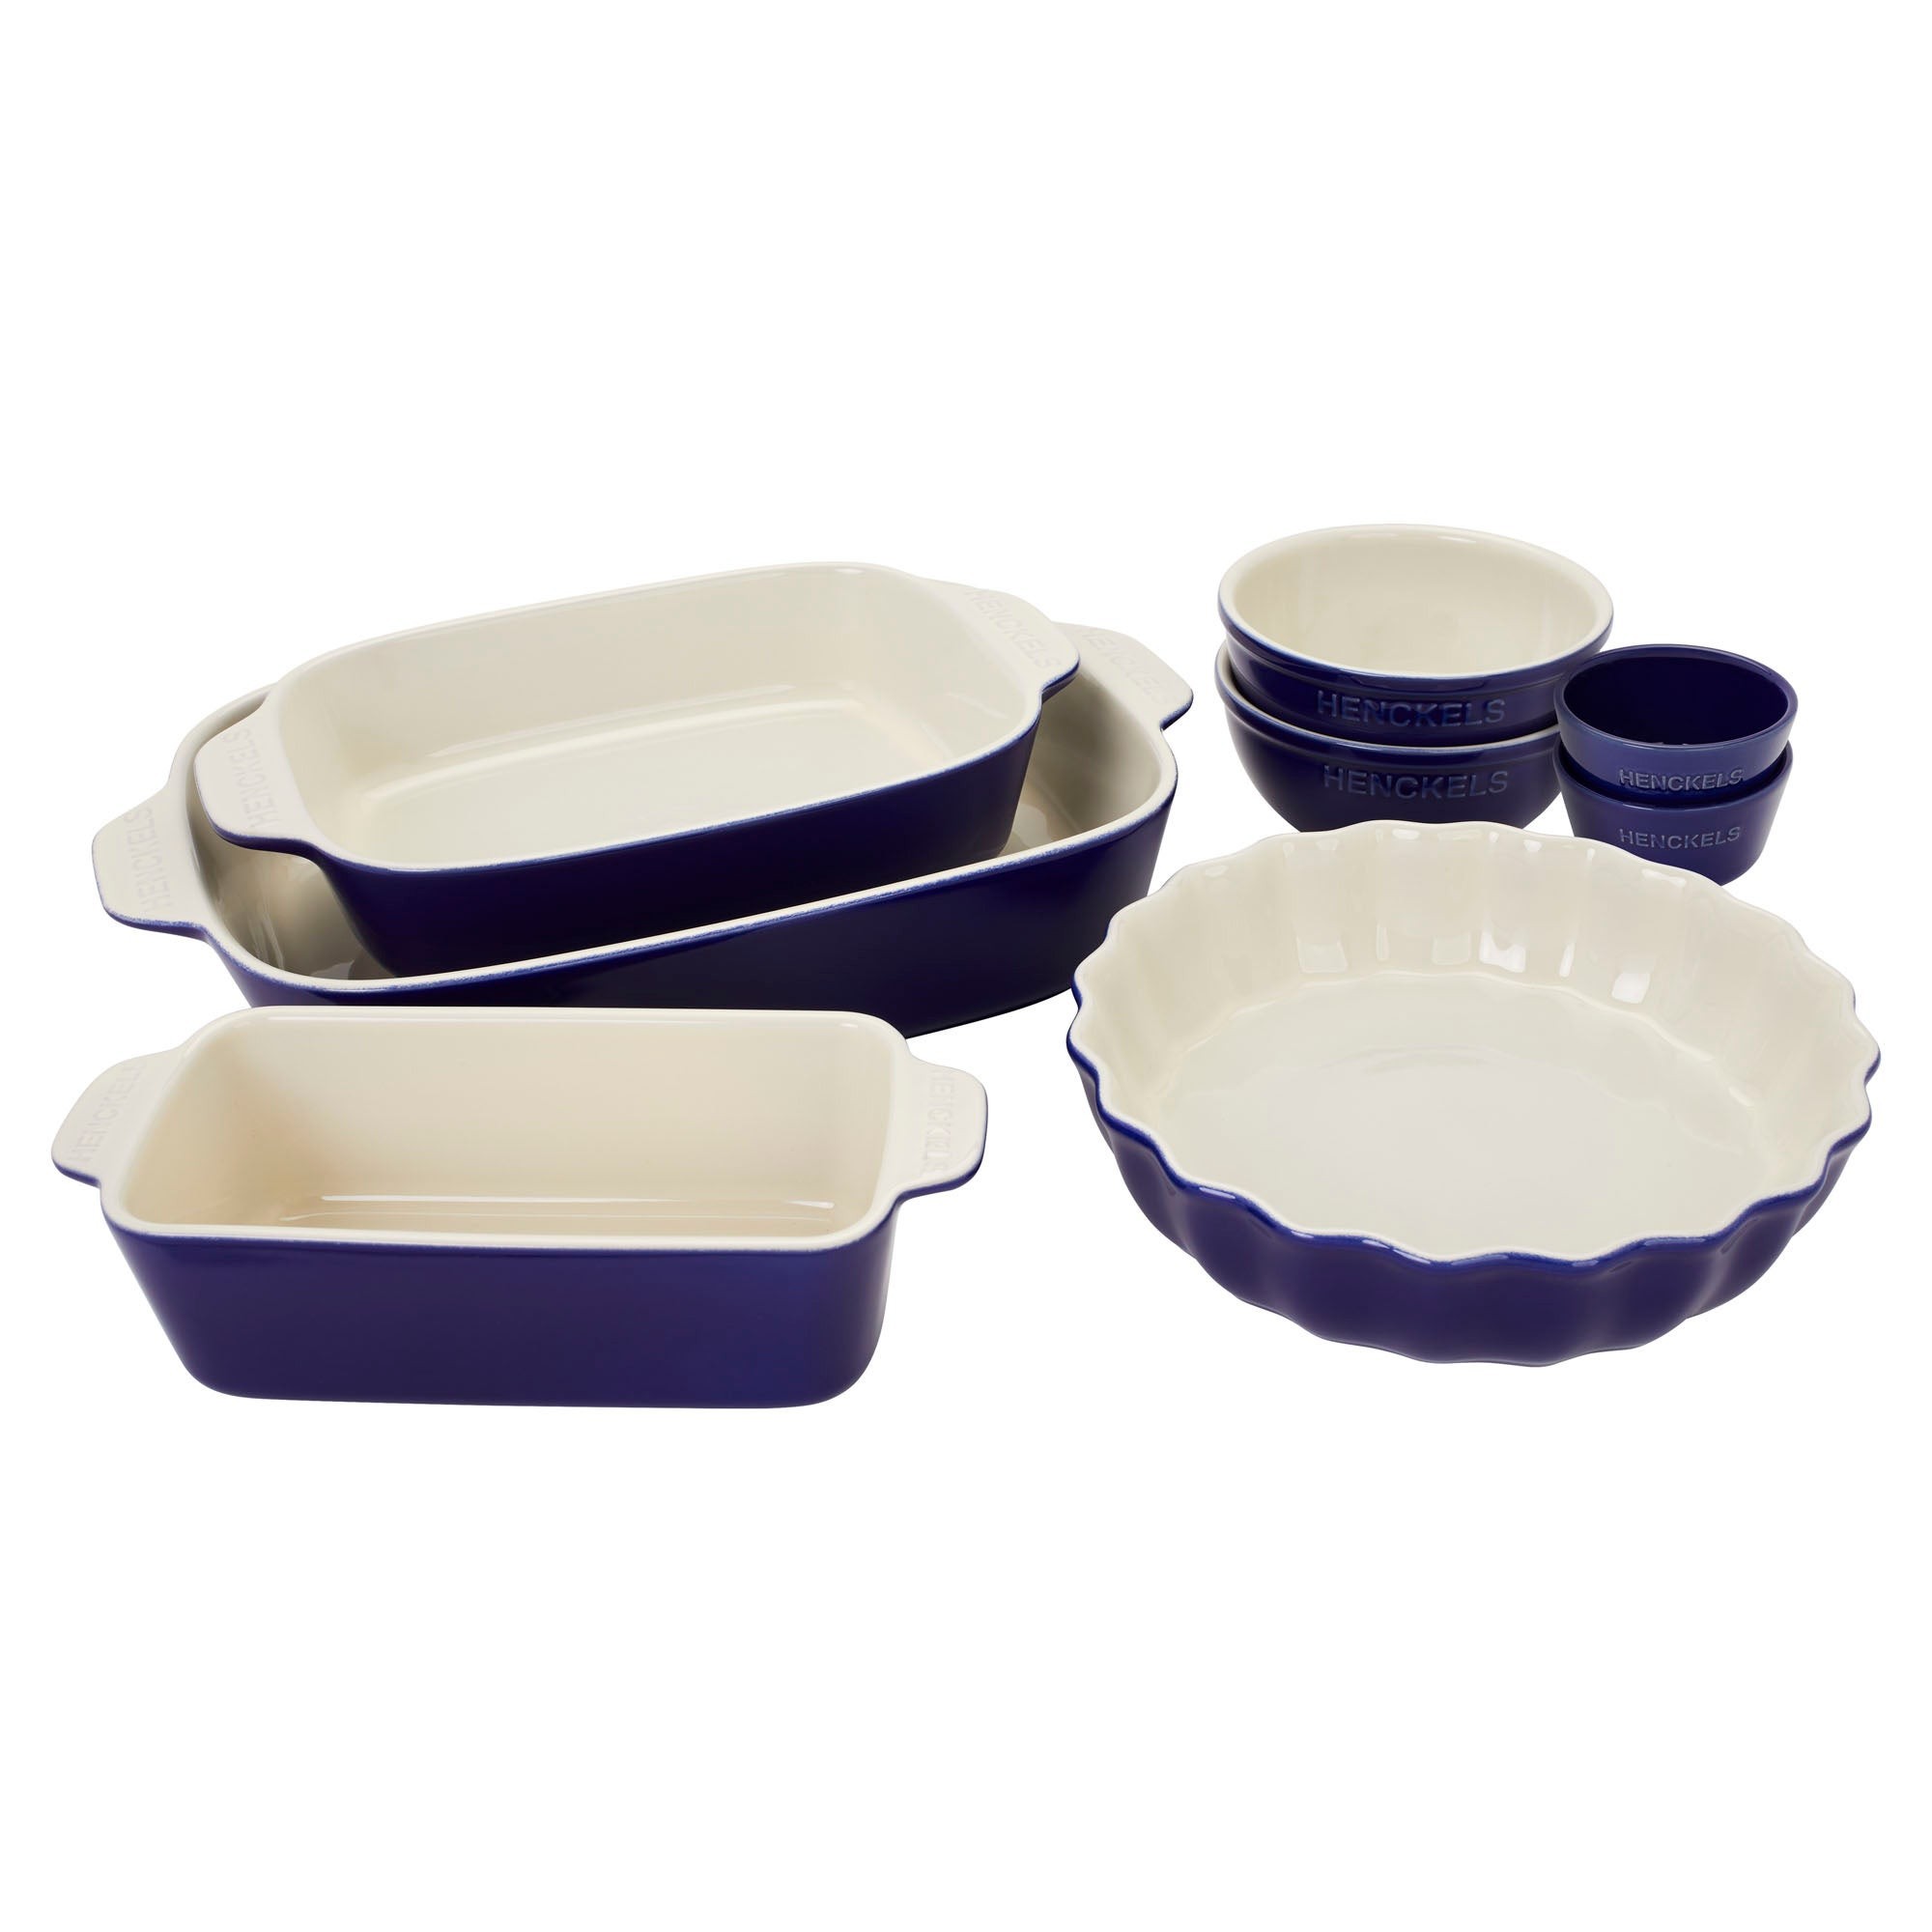 8pc Ceramic Mixed Bakeware & Serving Set Dark Blue